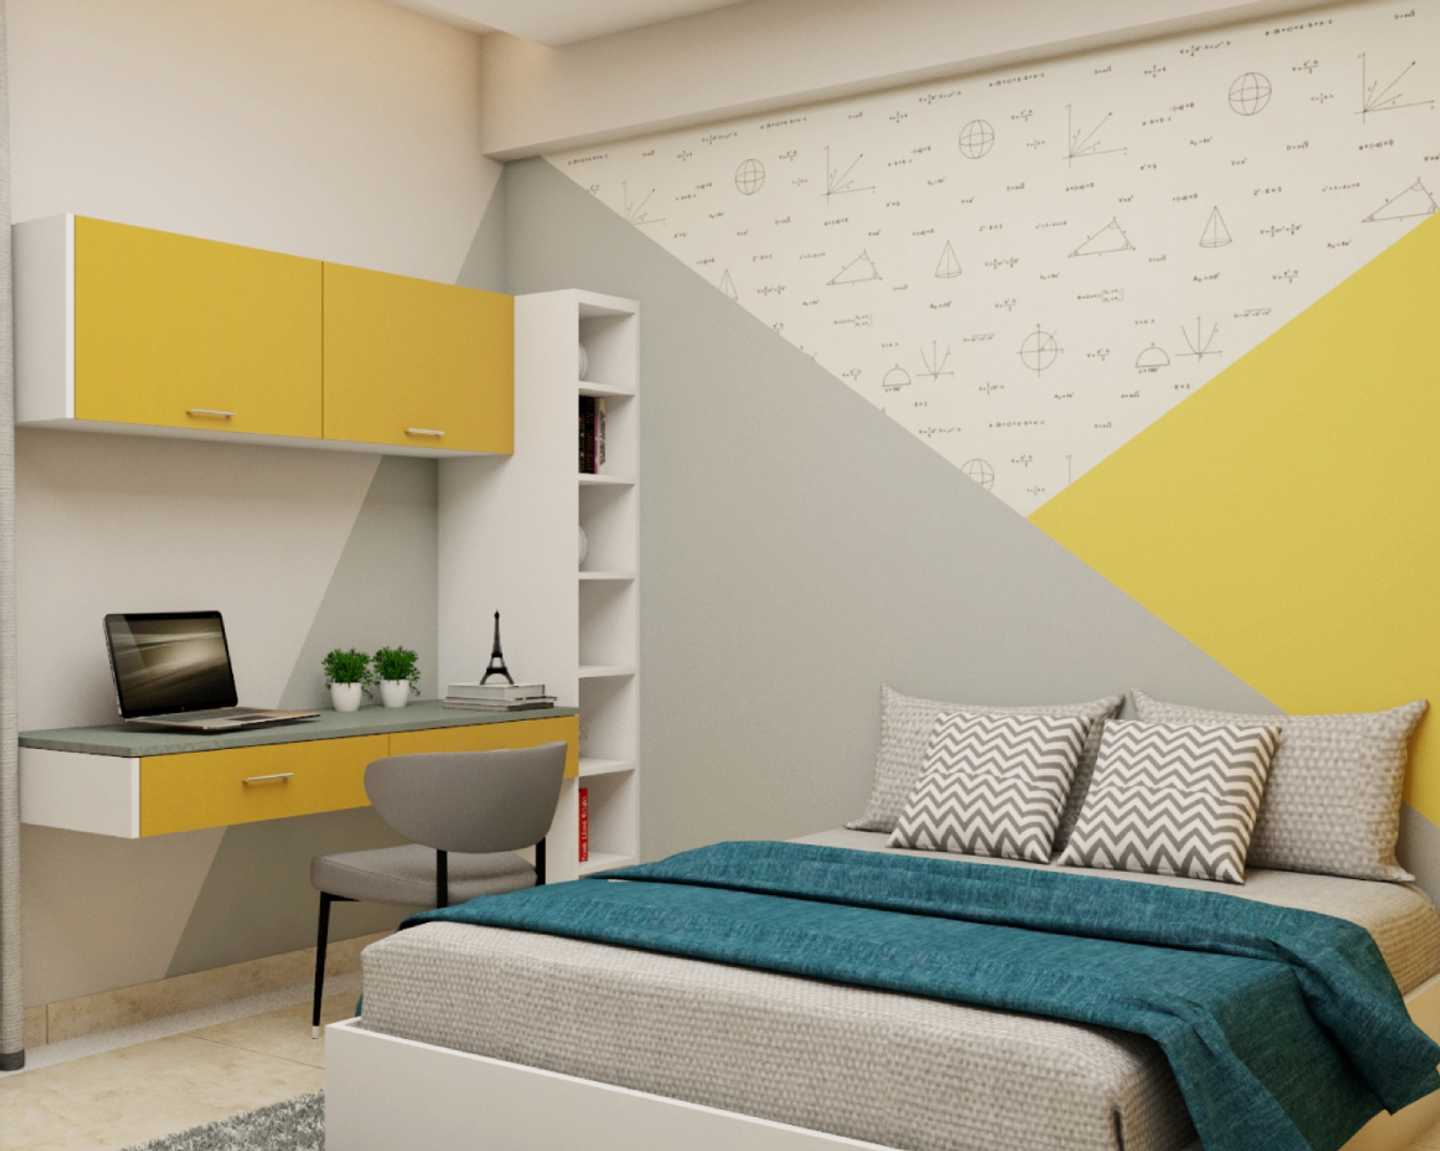 Spacious Bedroom in Vibrant Yellow - Livspace